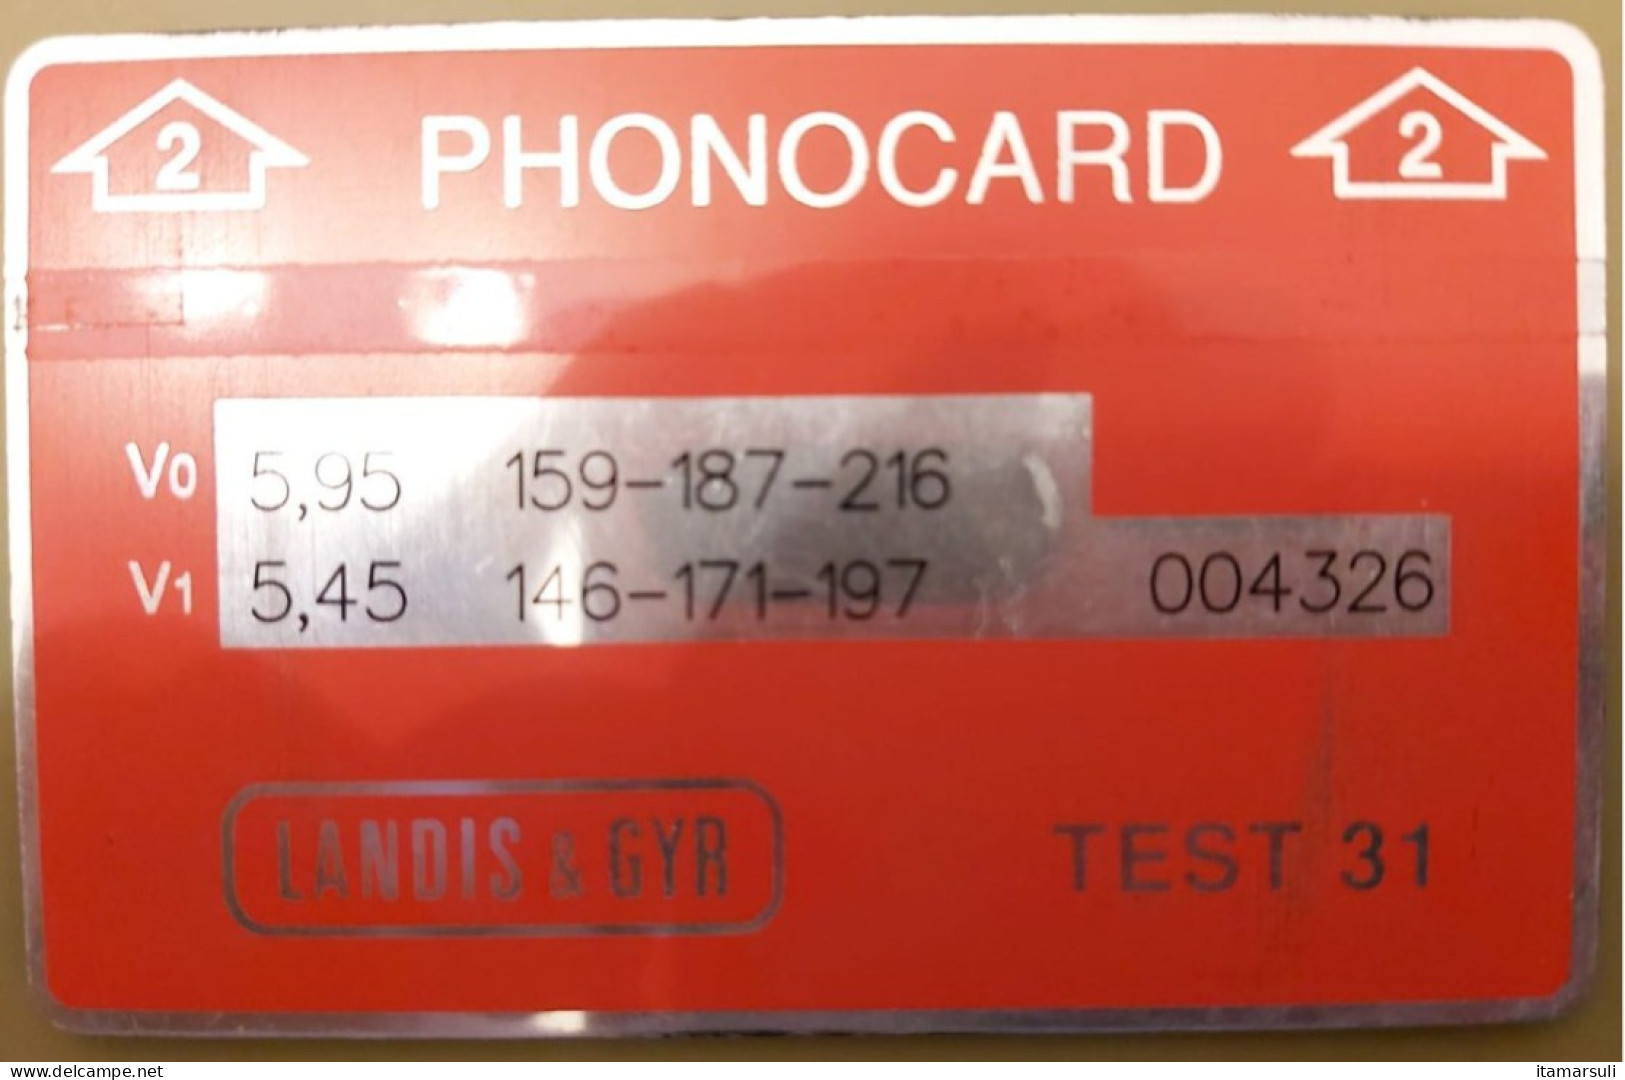 ISRAEL - Bezeq L&G Test Card Struc 2, Red With Silver Frame, 004326, BZ-24 - Israel